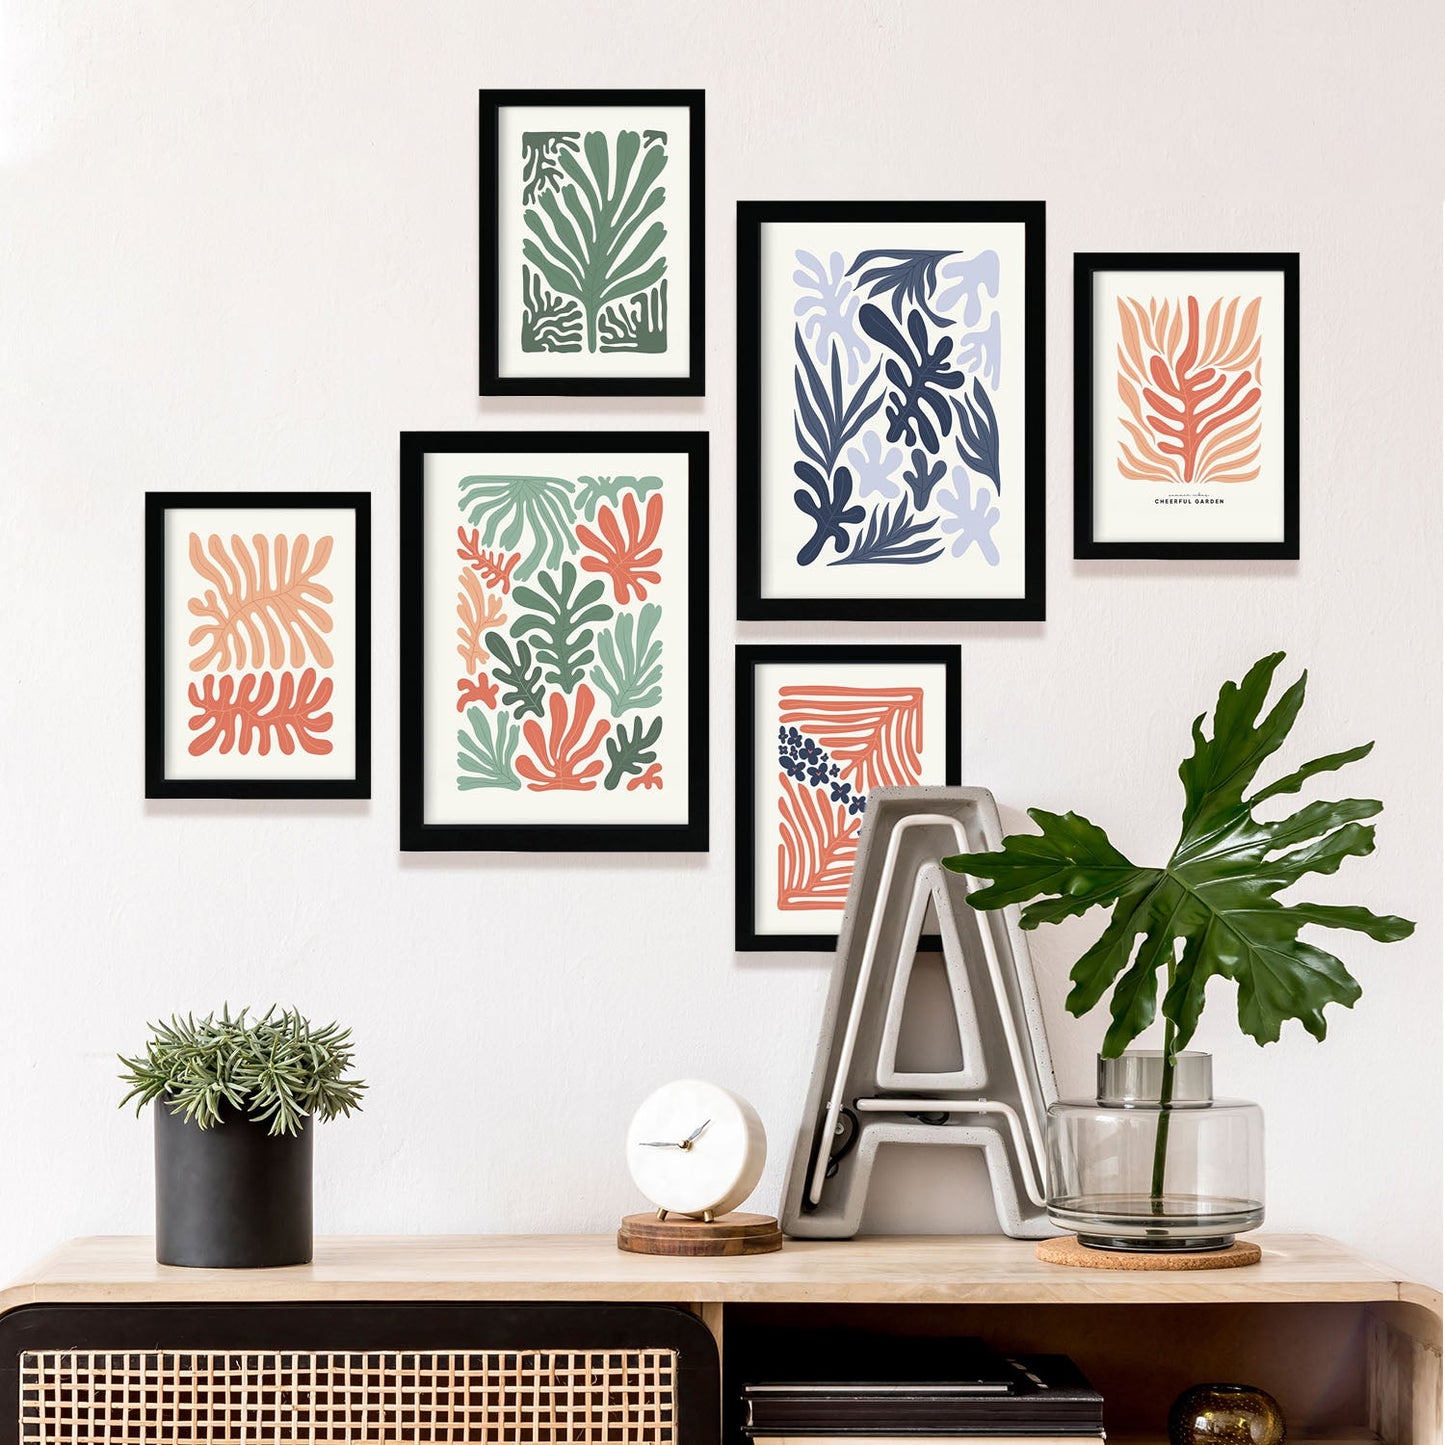 Minimalism Posters in Pastel Colours. Plant Patterns.-Artwork-Nacnic-Nacnic Estudio SL